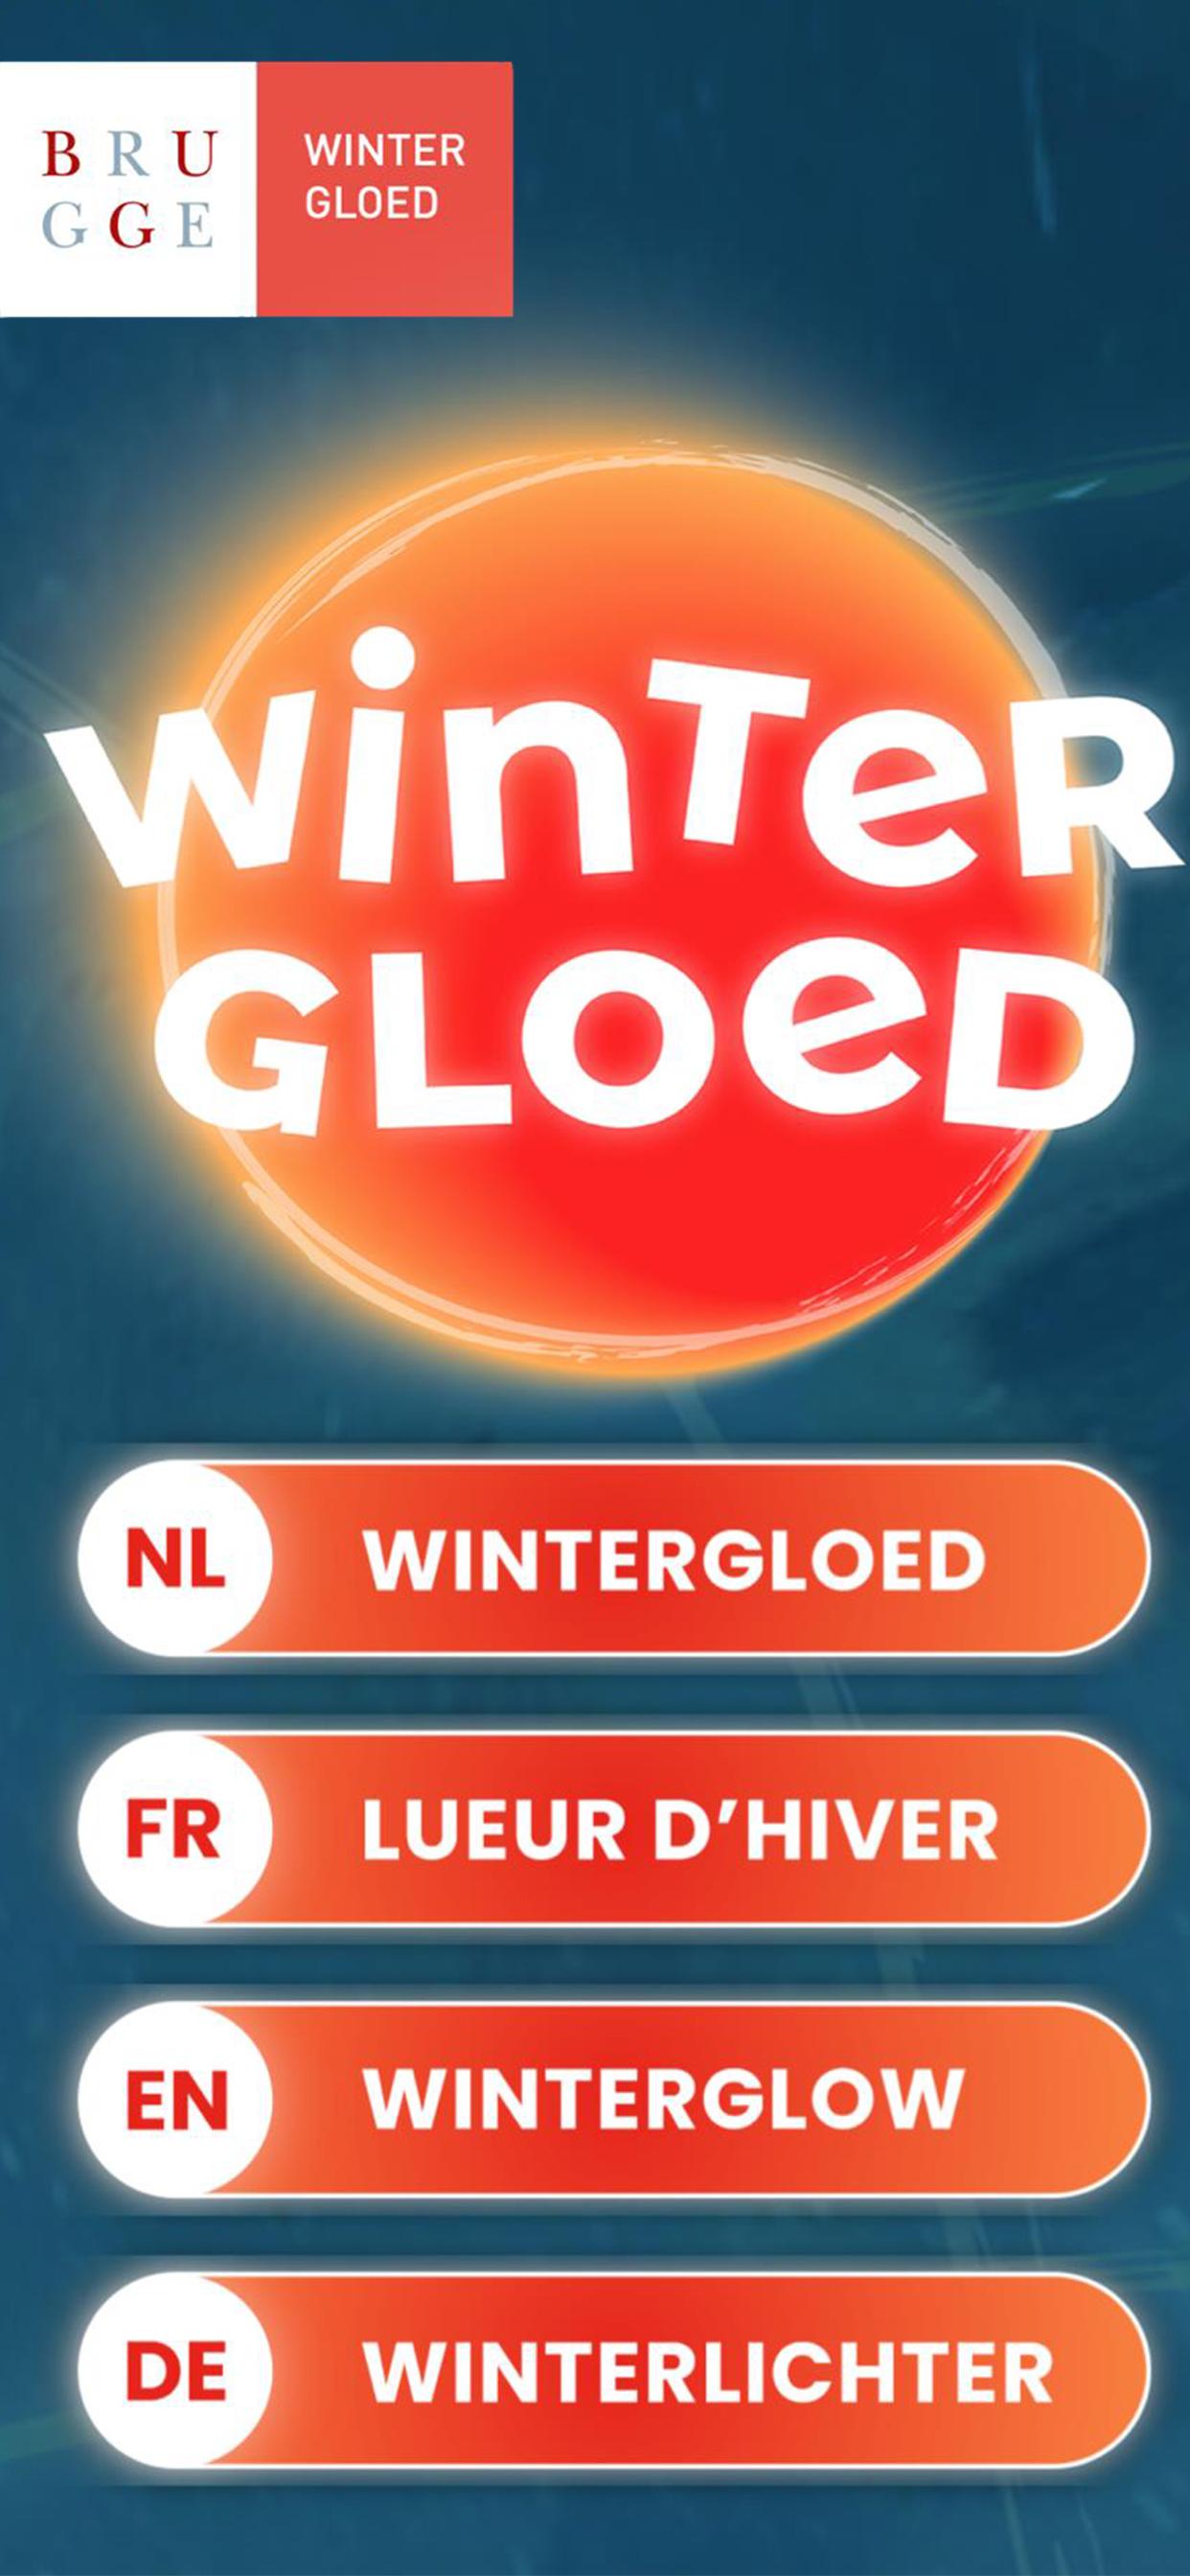 Wintergloed Brugge 1.3 Screenshot 11